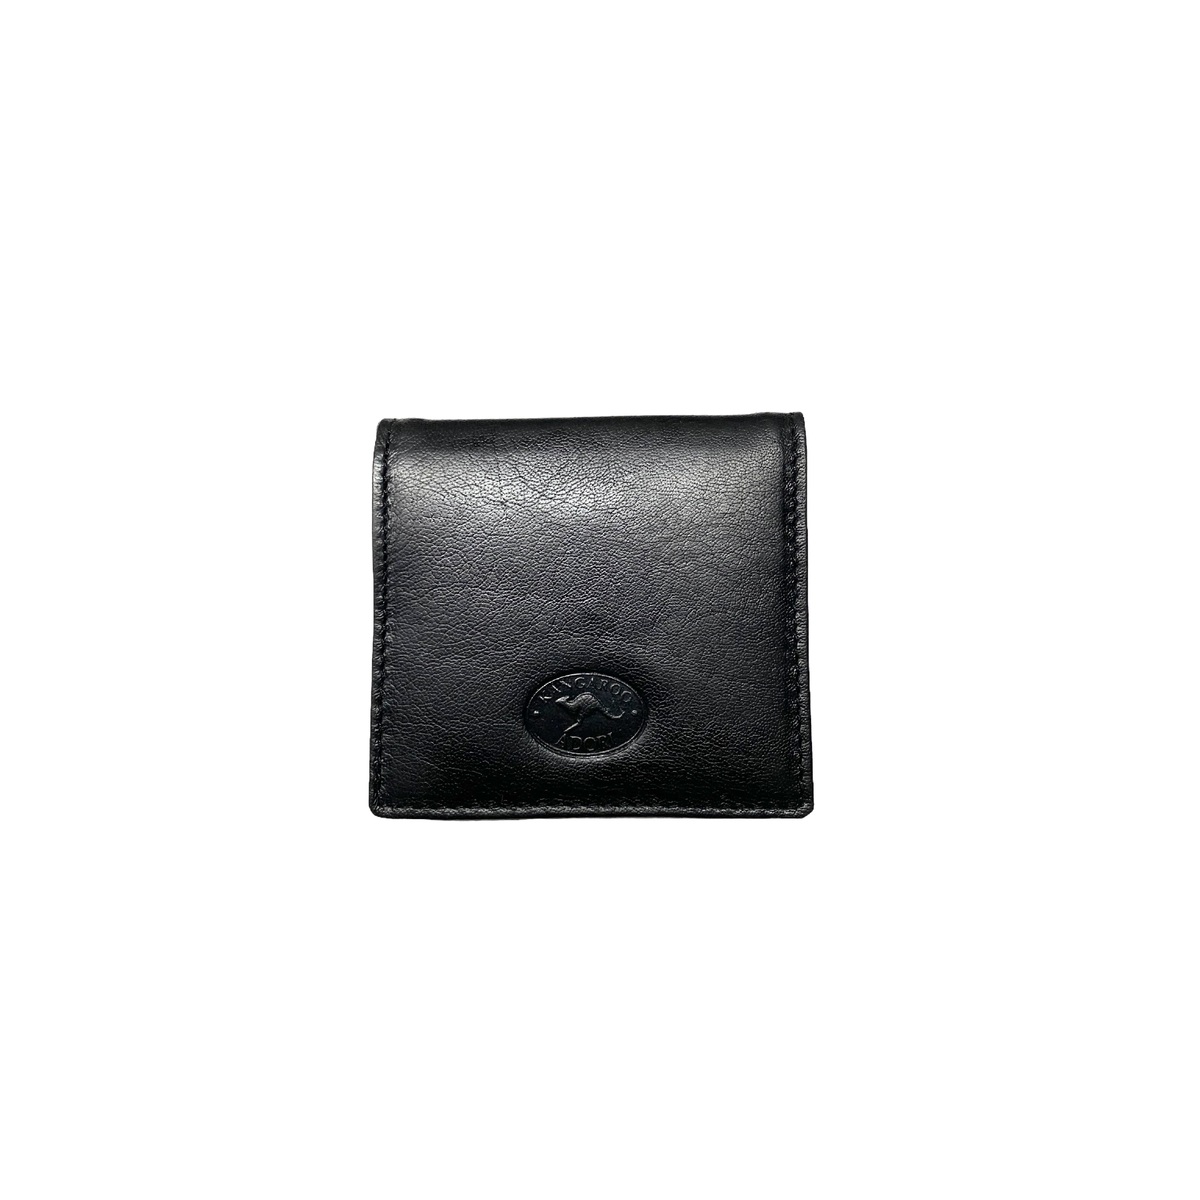 KW2101Coin purse Black Kangaroo leather